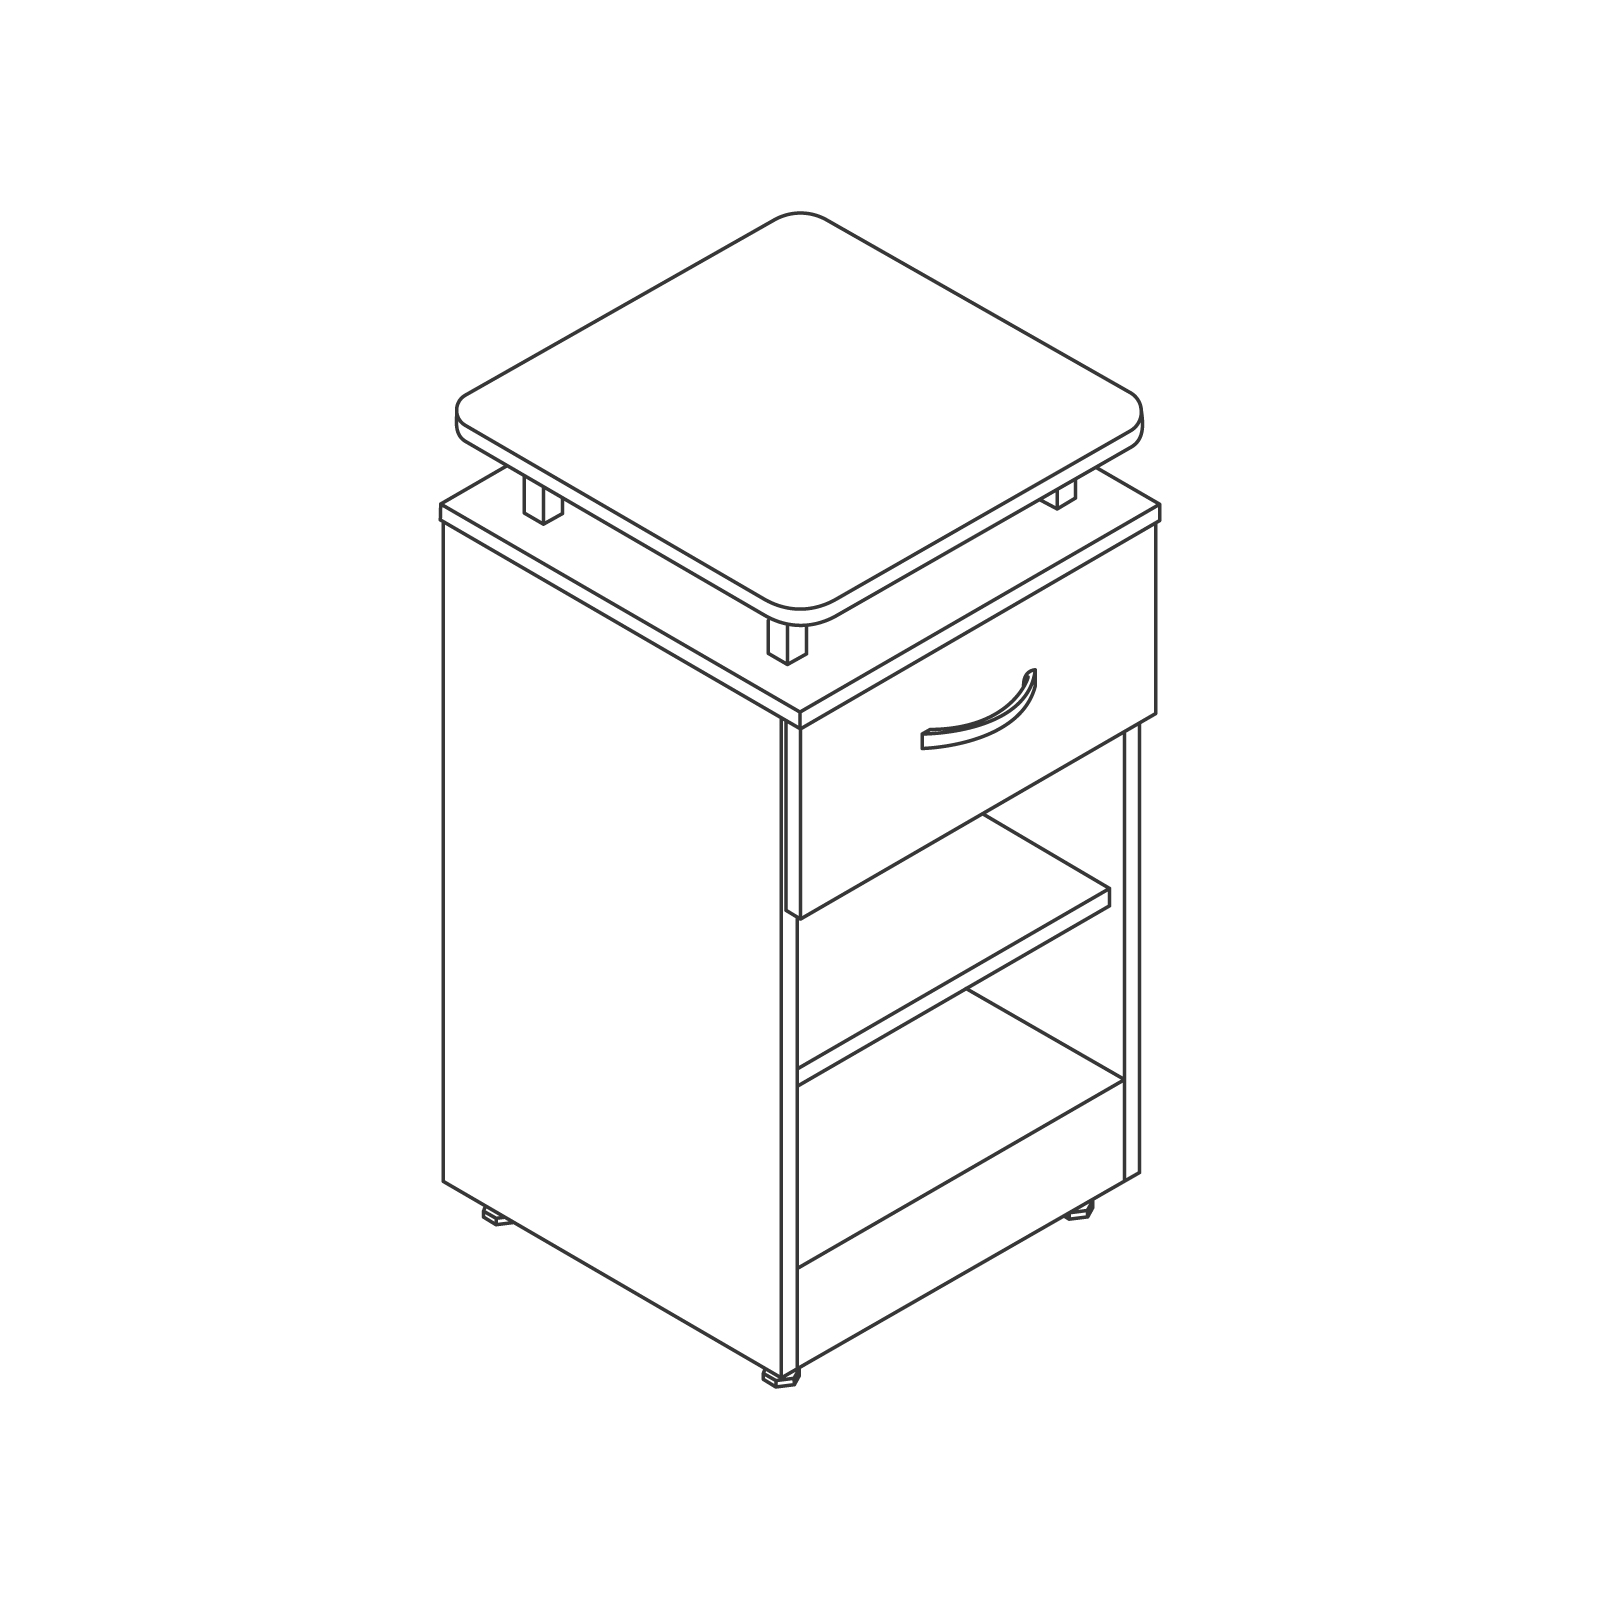 A line drawing - Nemschoff Bedside Cabinet–Raised Top–Adjustable Glides